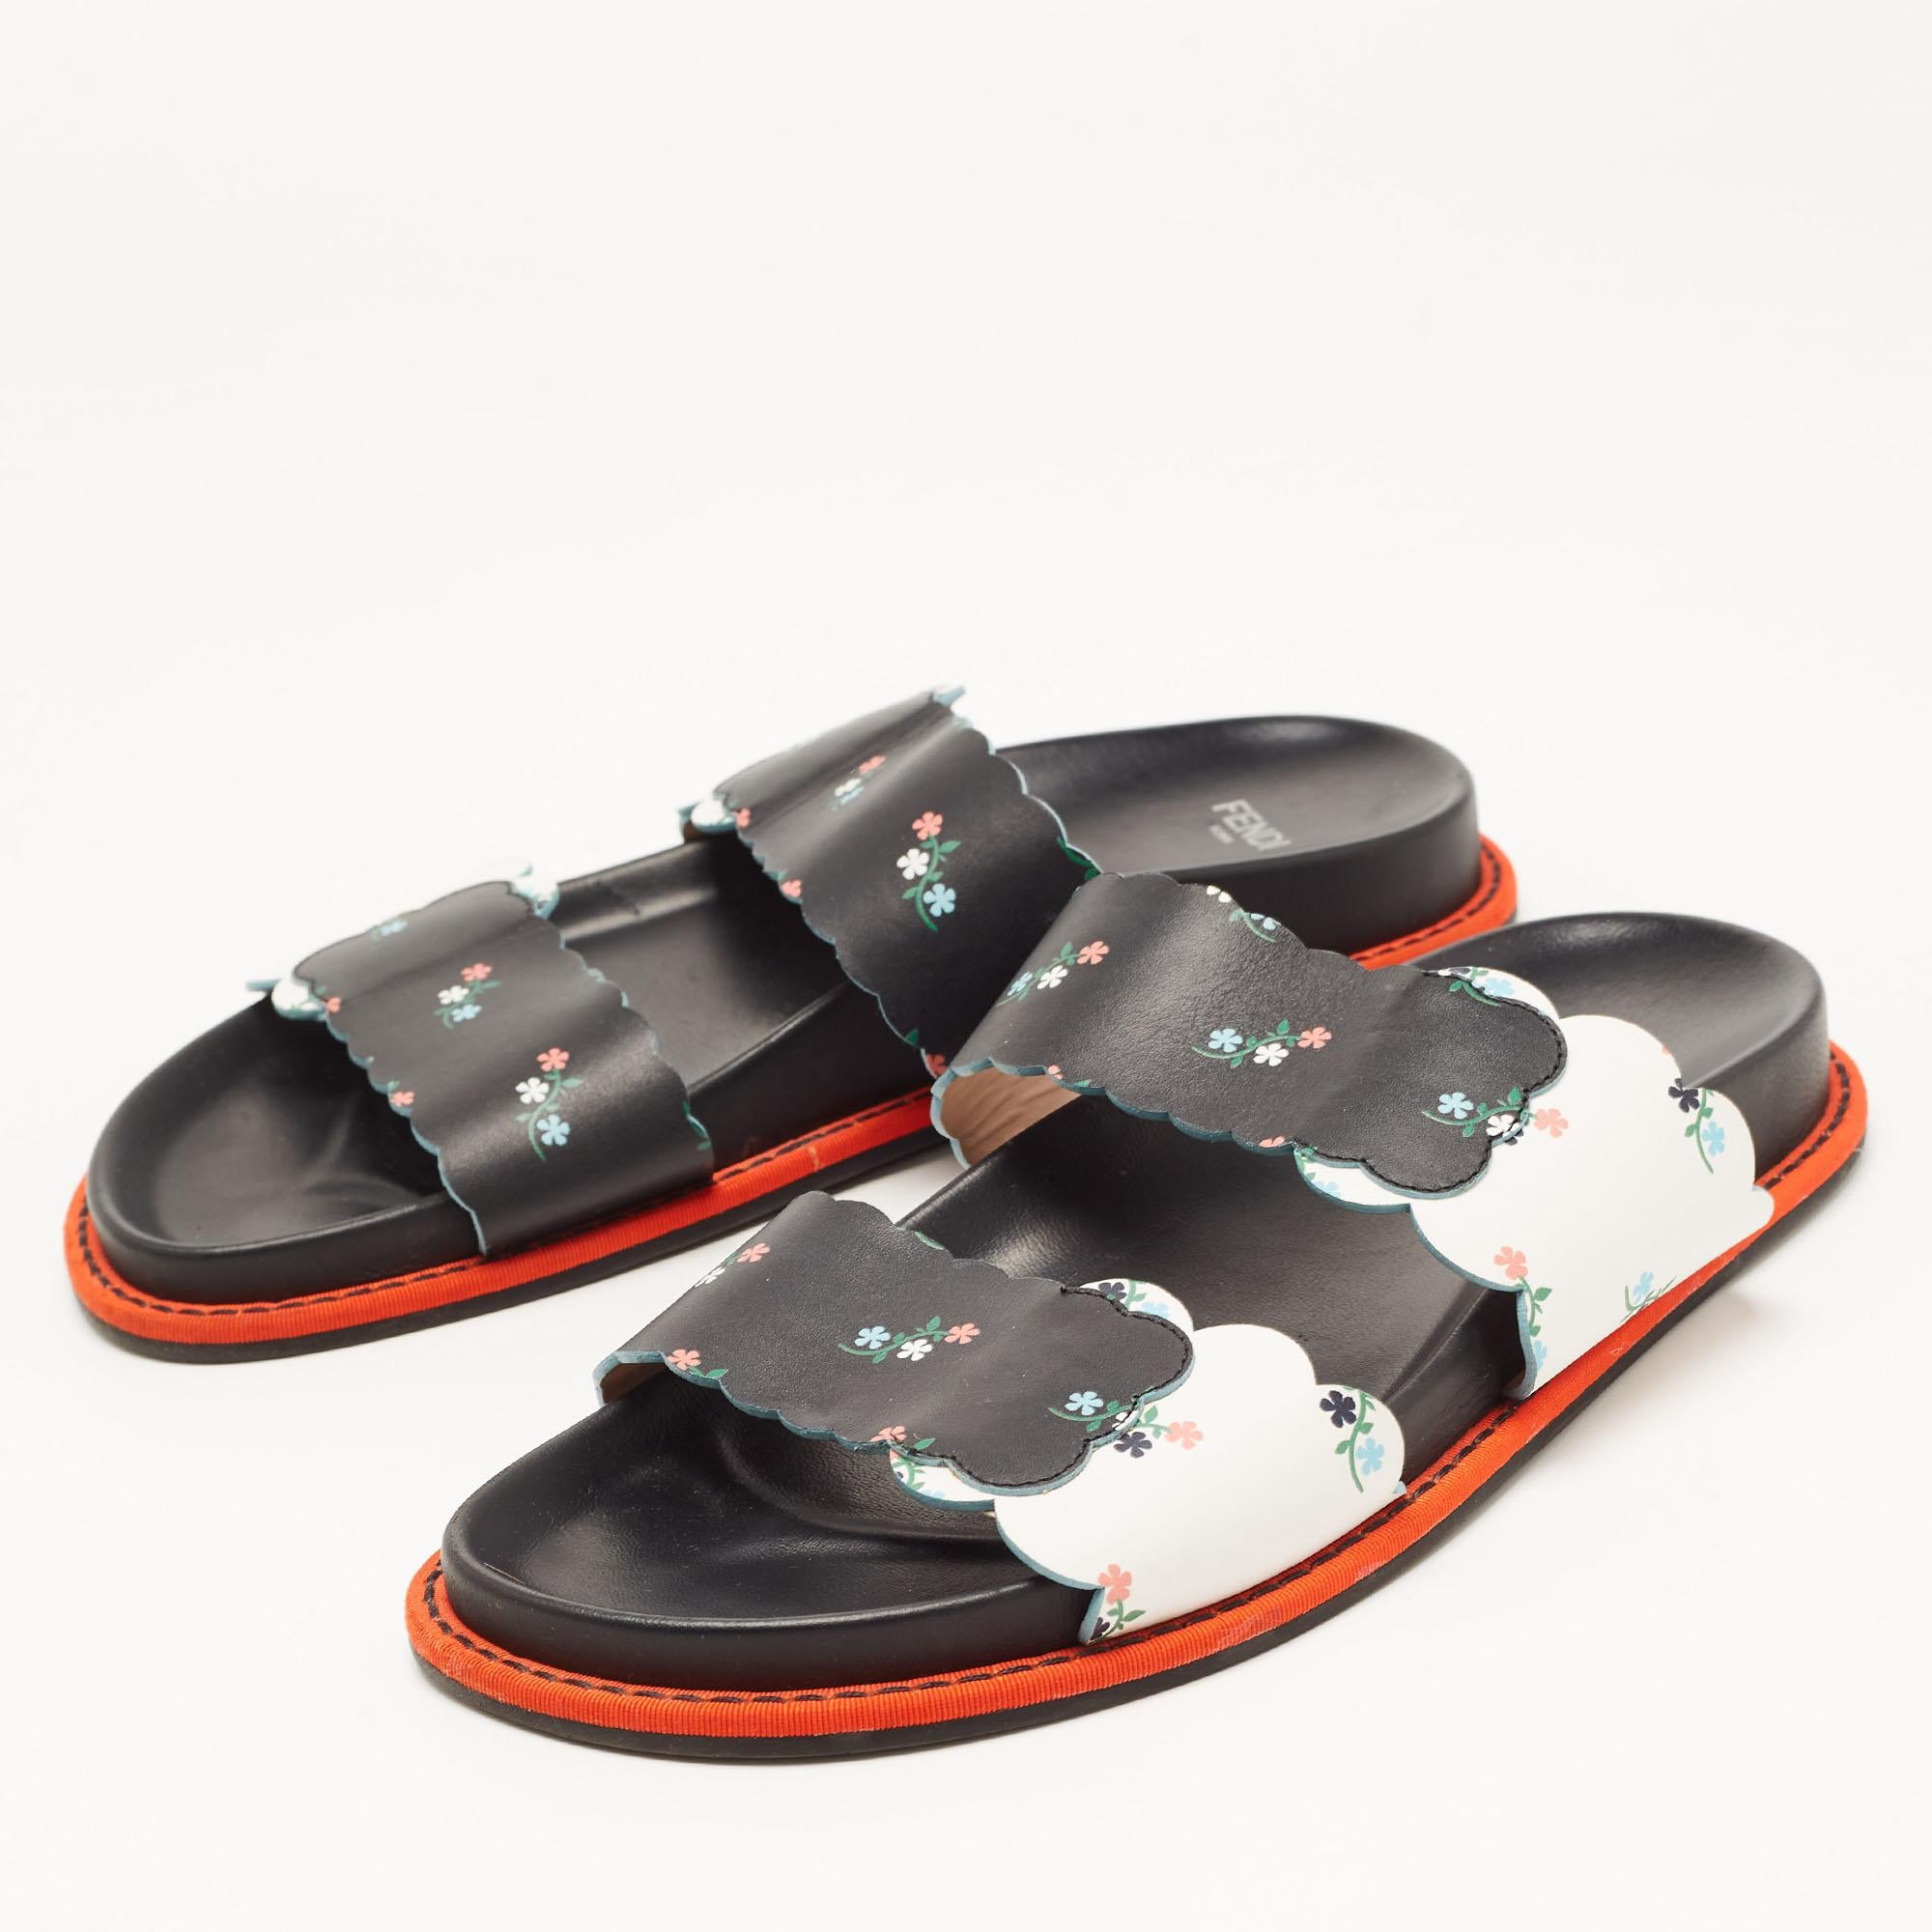 Fendi Multicolor Floral Print Leather Strap Slide Sandals Size 38 In Good Condition For Sale In Dubai, Al Qouz 2